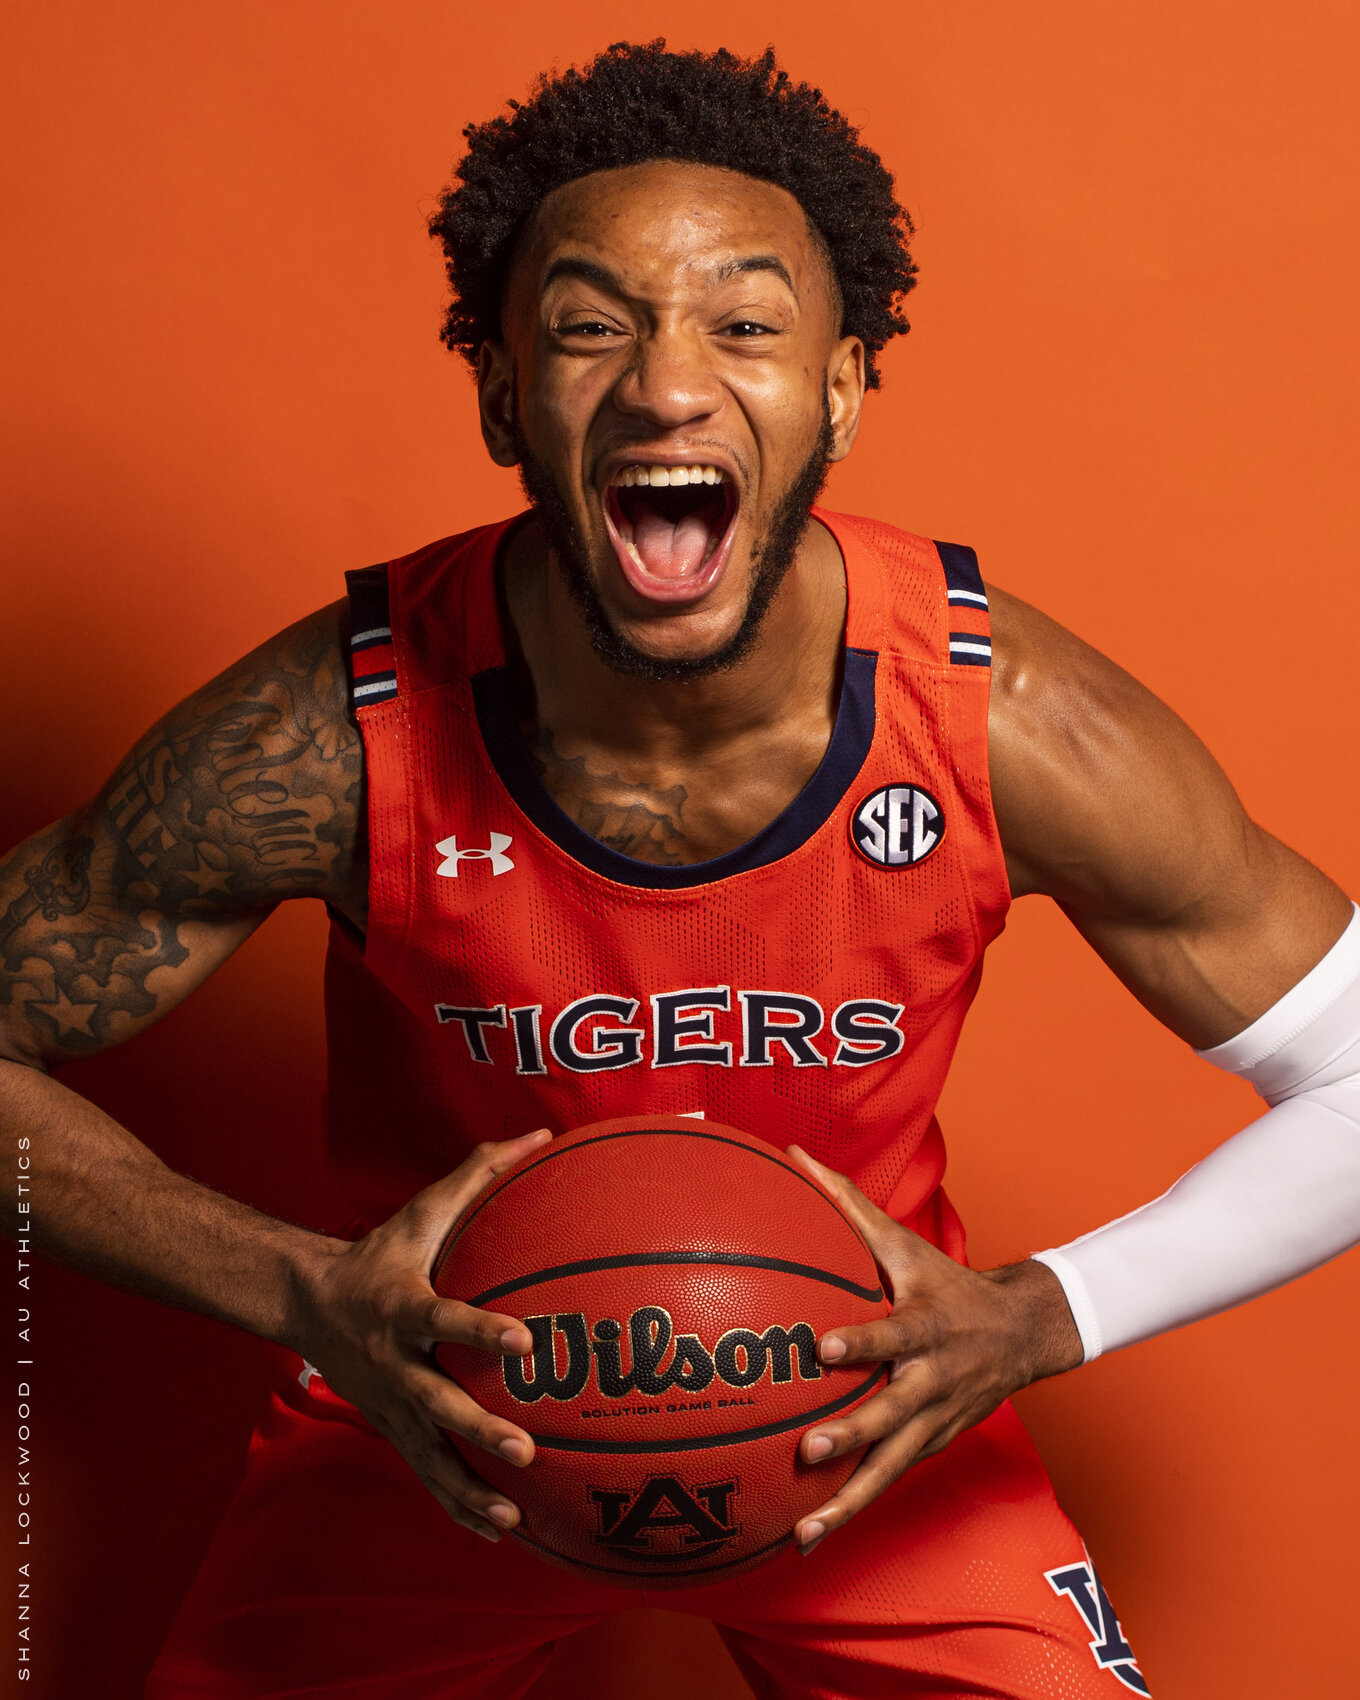  Oct 29, 2020; Auburn, AL, USA; Jamal Johnson poses  during the 2020-21 men's basketball team asset photo day at Auburn Arena. Mandatory Credit: Shanna Lockwood/AU Athletics 